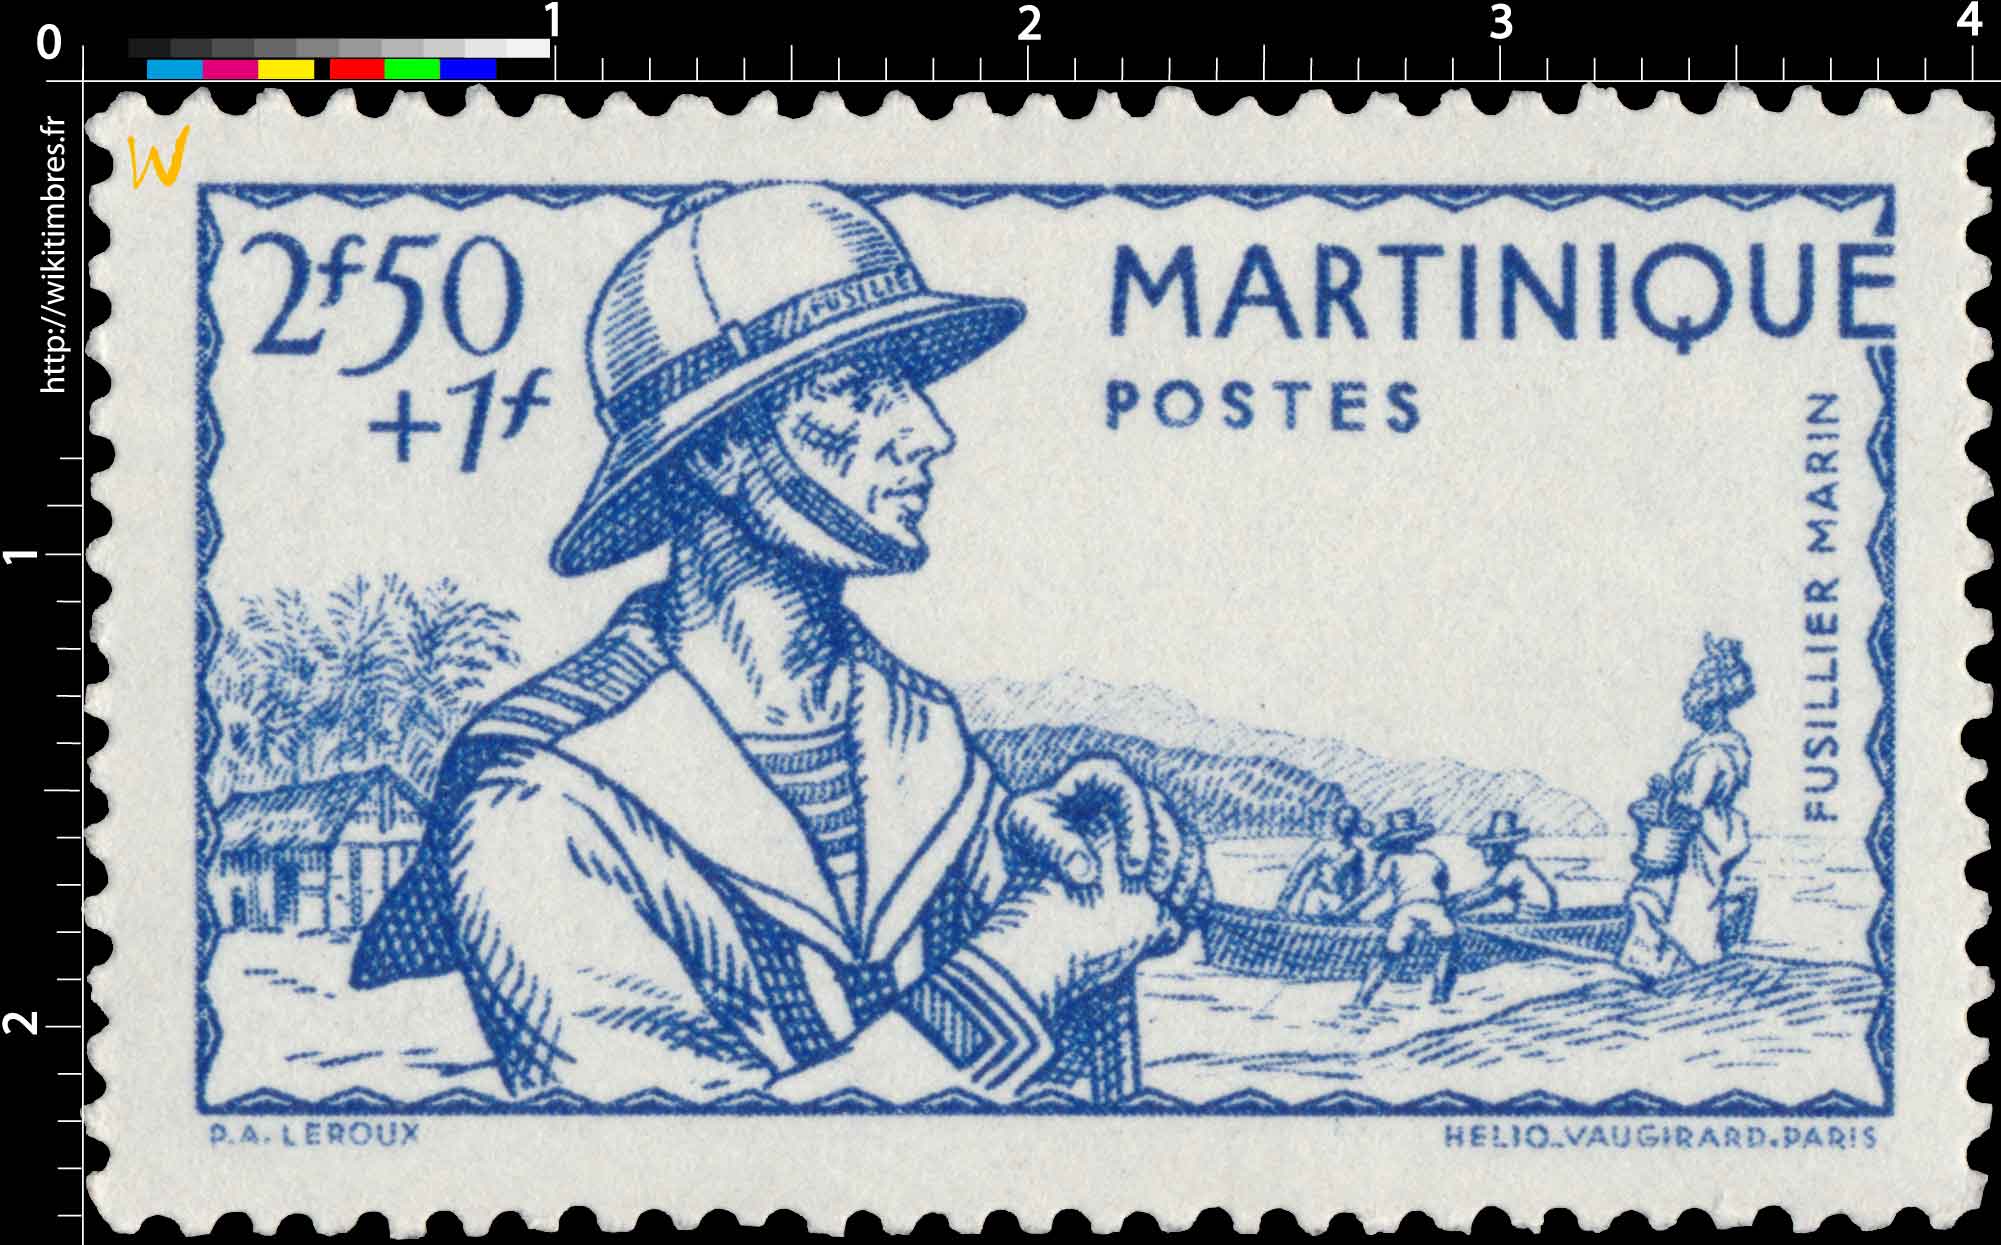 Martinique  Fusilier-marin